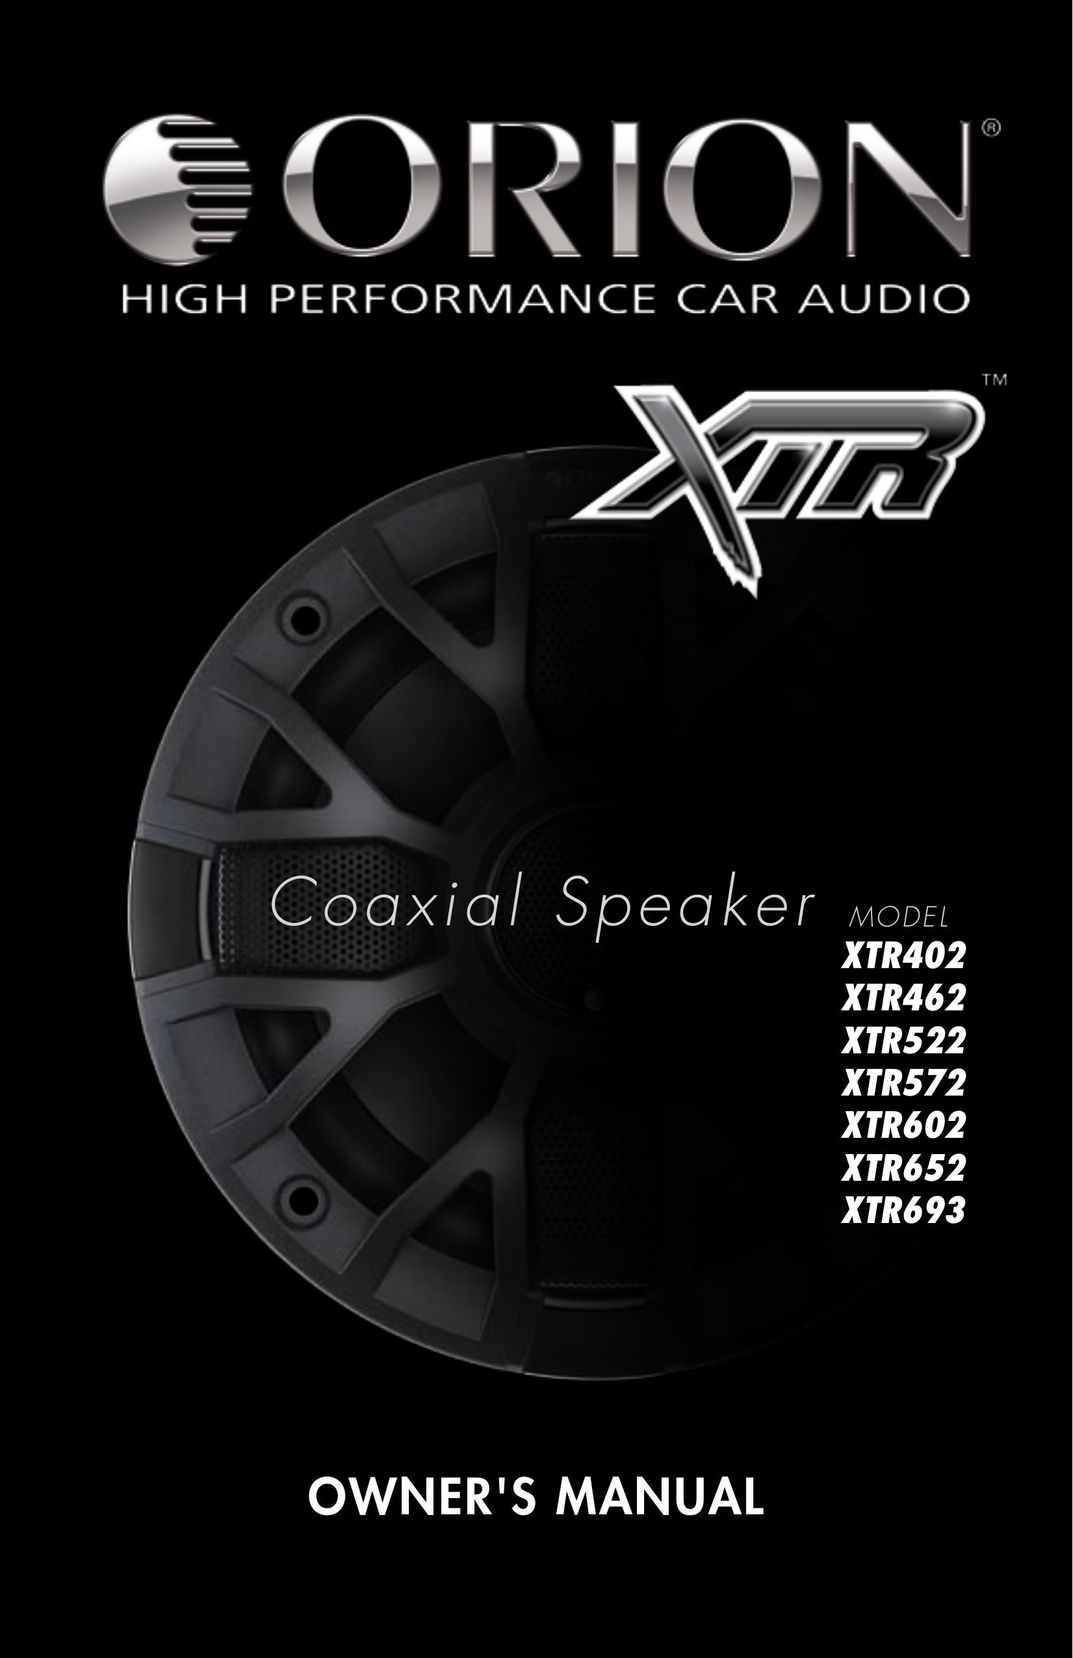 Orion Car Audio XTR602 Car Speaker User Manual